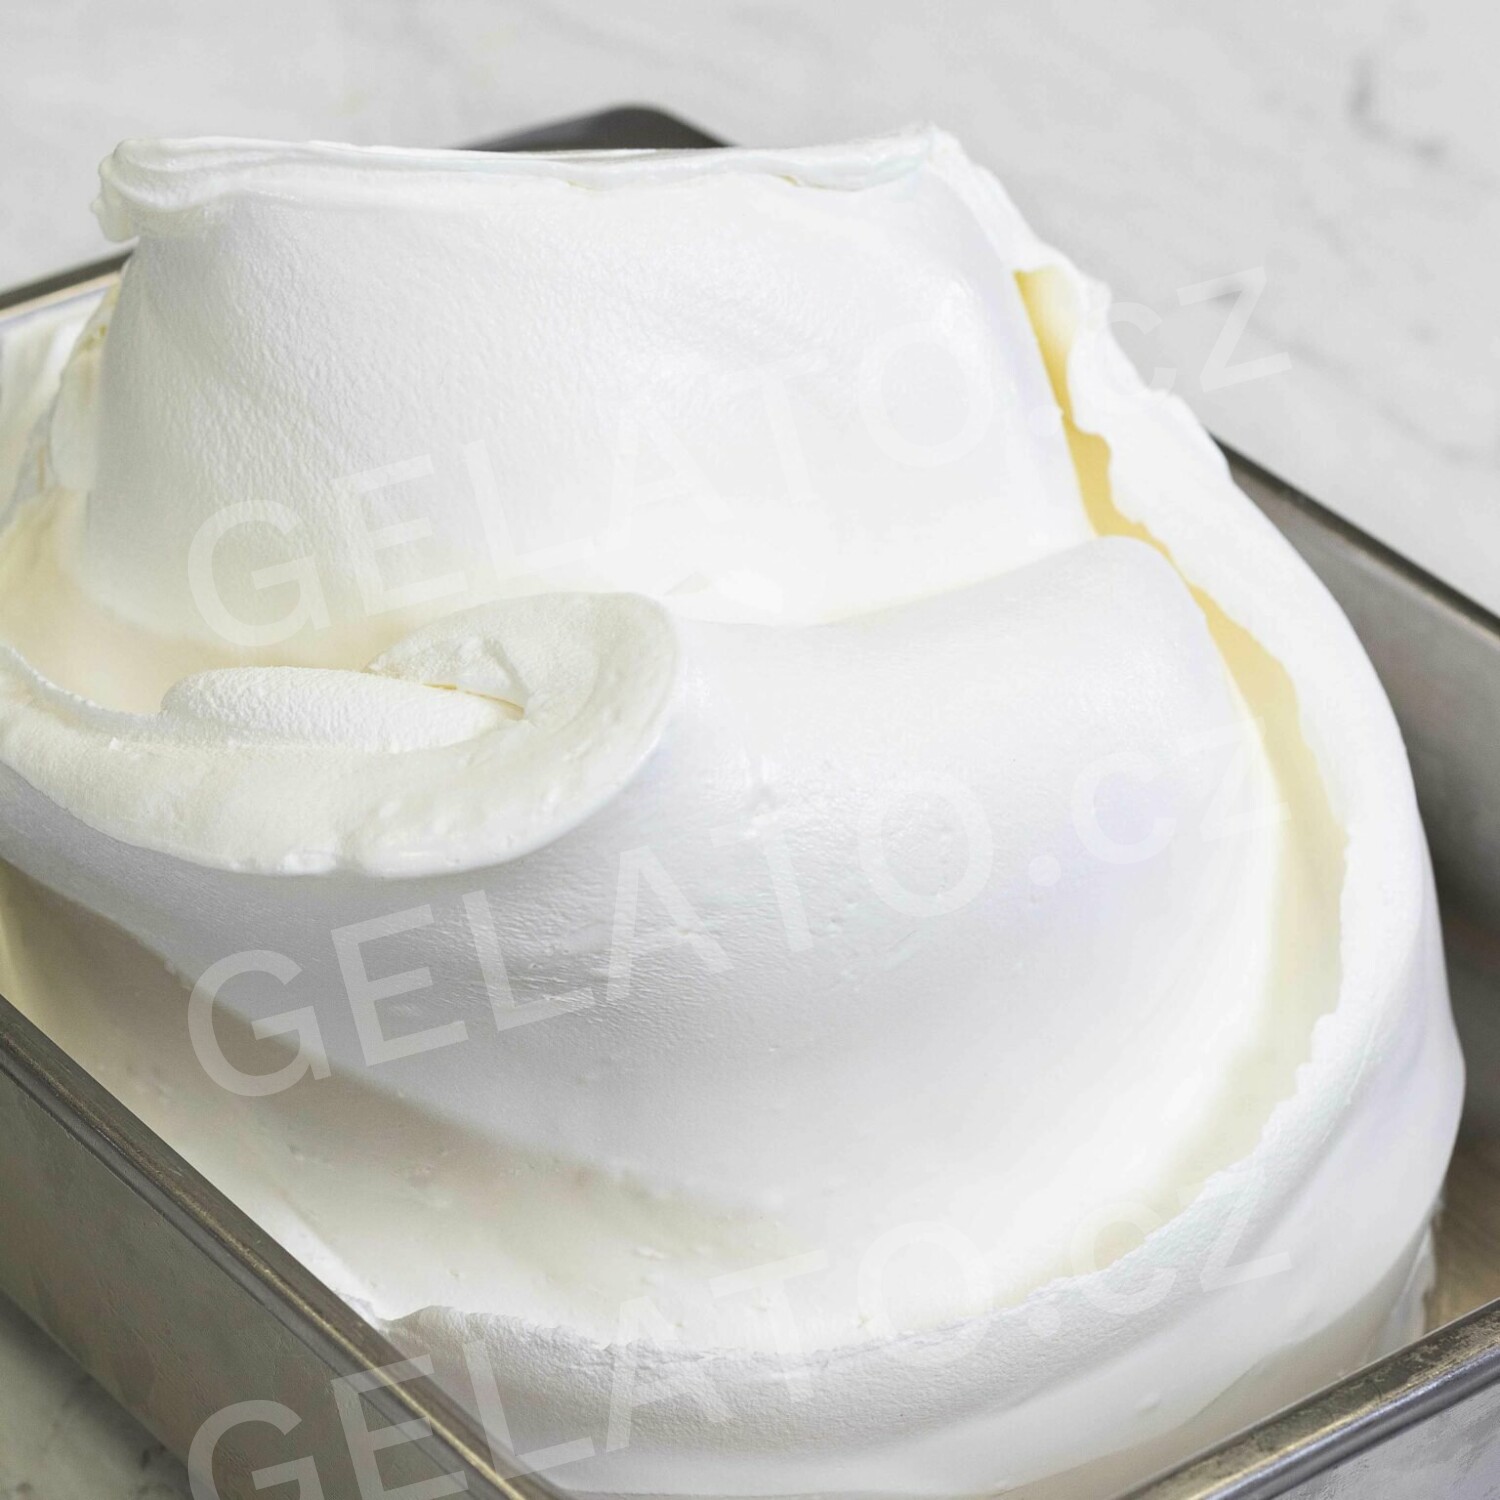 Gran Latte 330 - zmrzlinový základ mléčný za tepla i za studena - 2 kg, NOVINKA